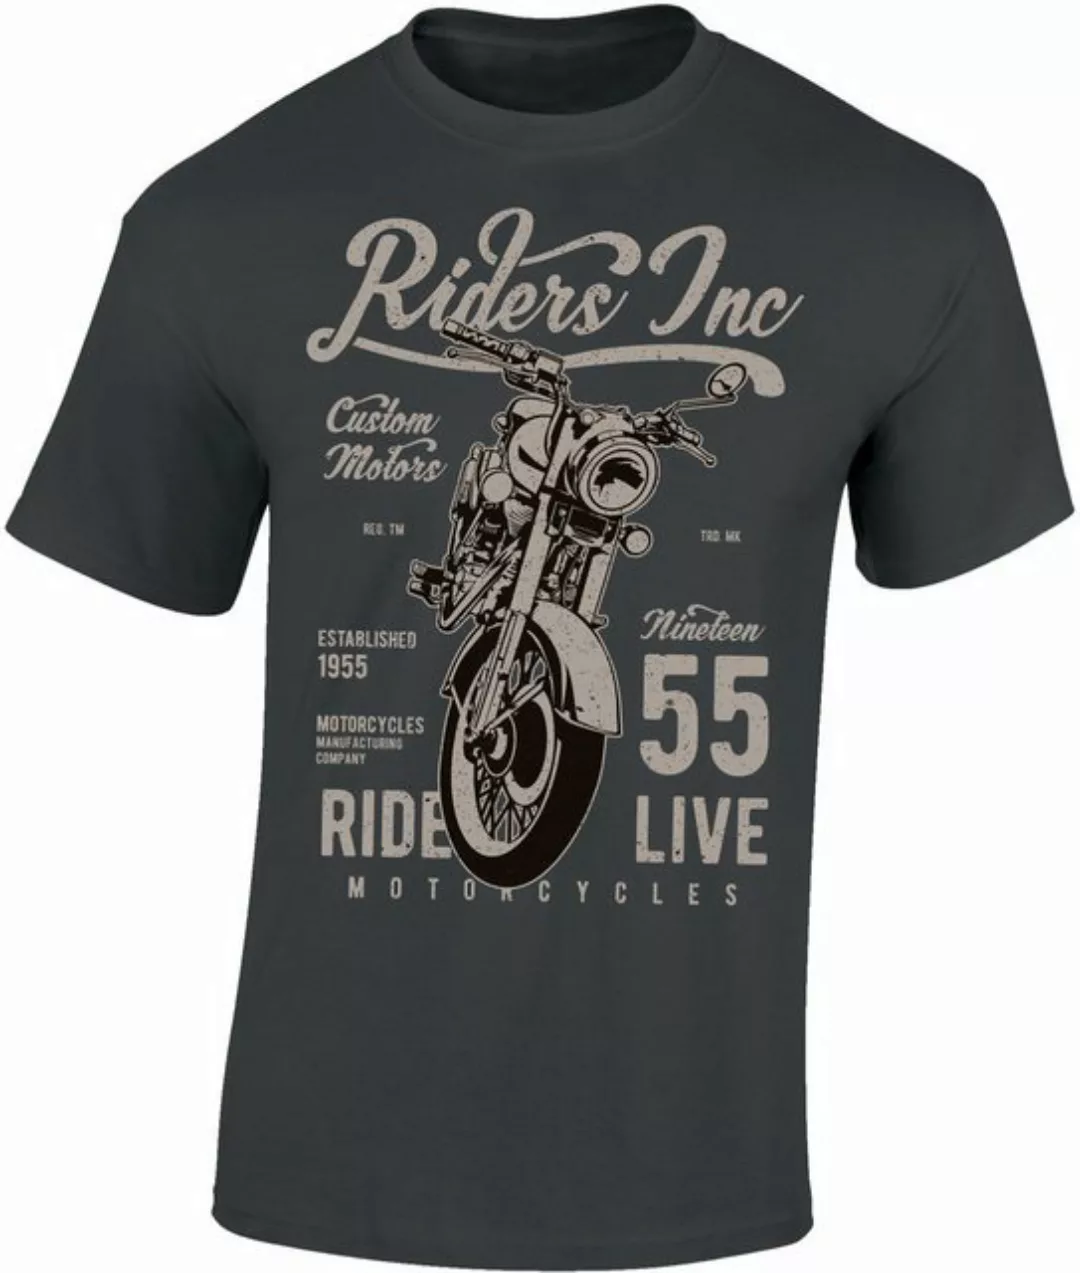 Baddery Print-Shirt Biker Shirt: "Riders Inc." - Motorrad T-Shirt, hochwert günstig online kaufen